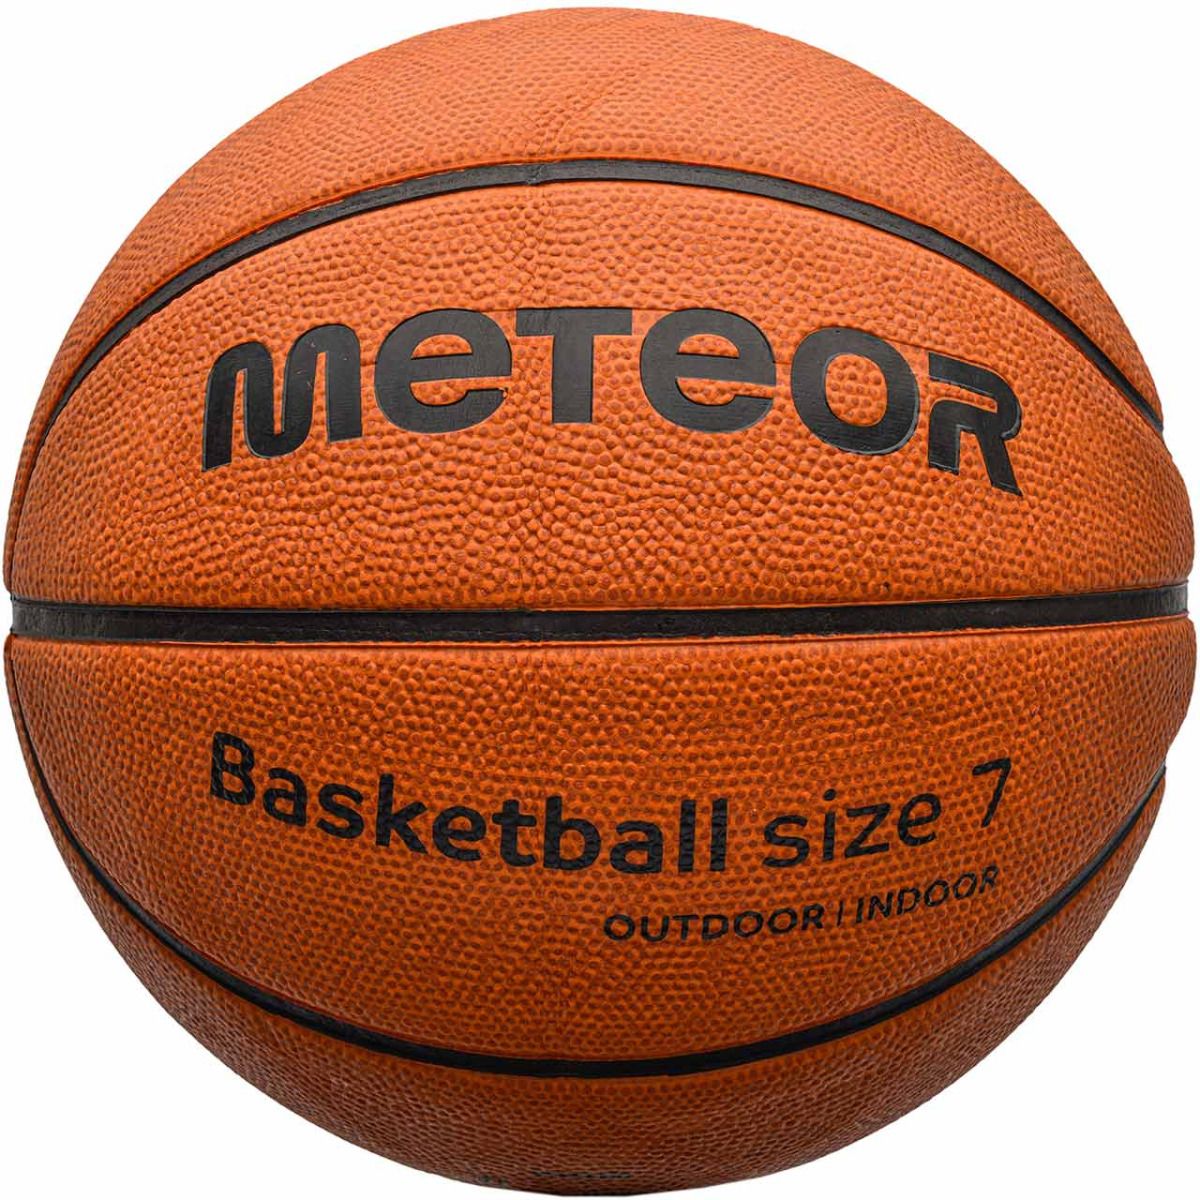 Meteor Basketball Cellular 8 10103